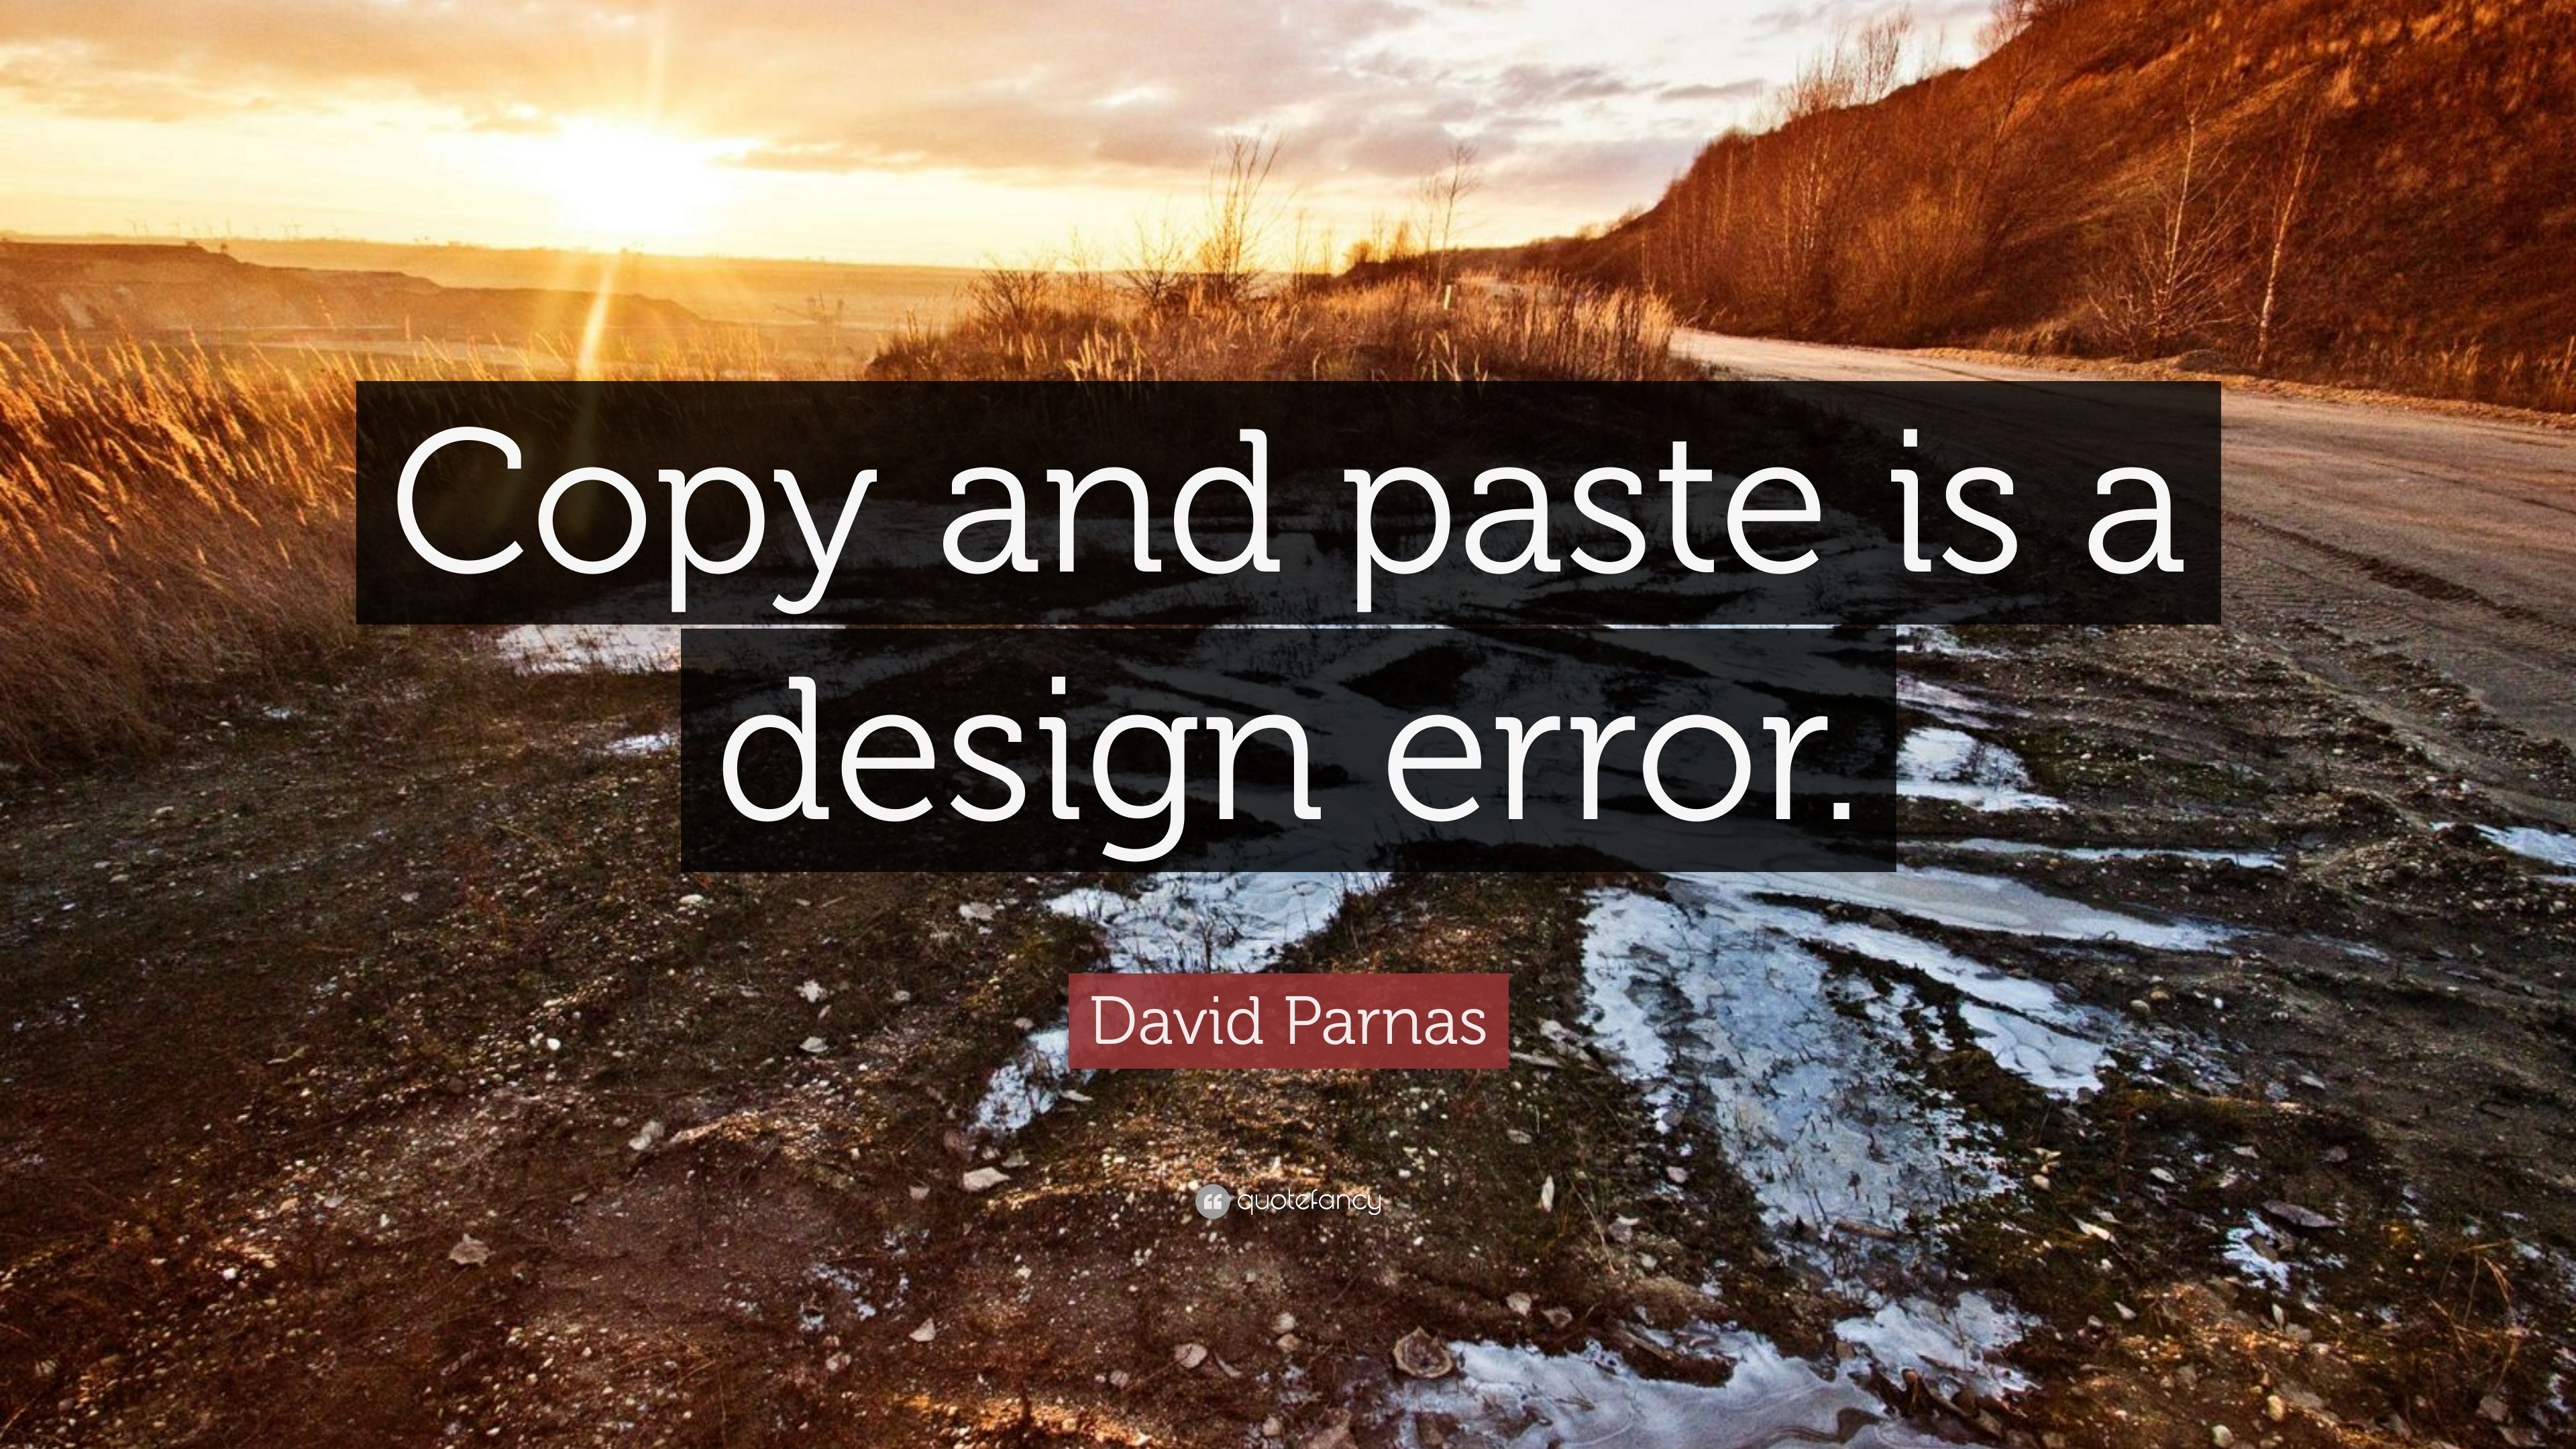 David Parnas Quote: “Copy and paste is a design error.” (9 wallpaper)